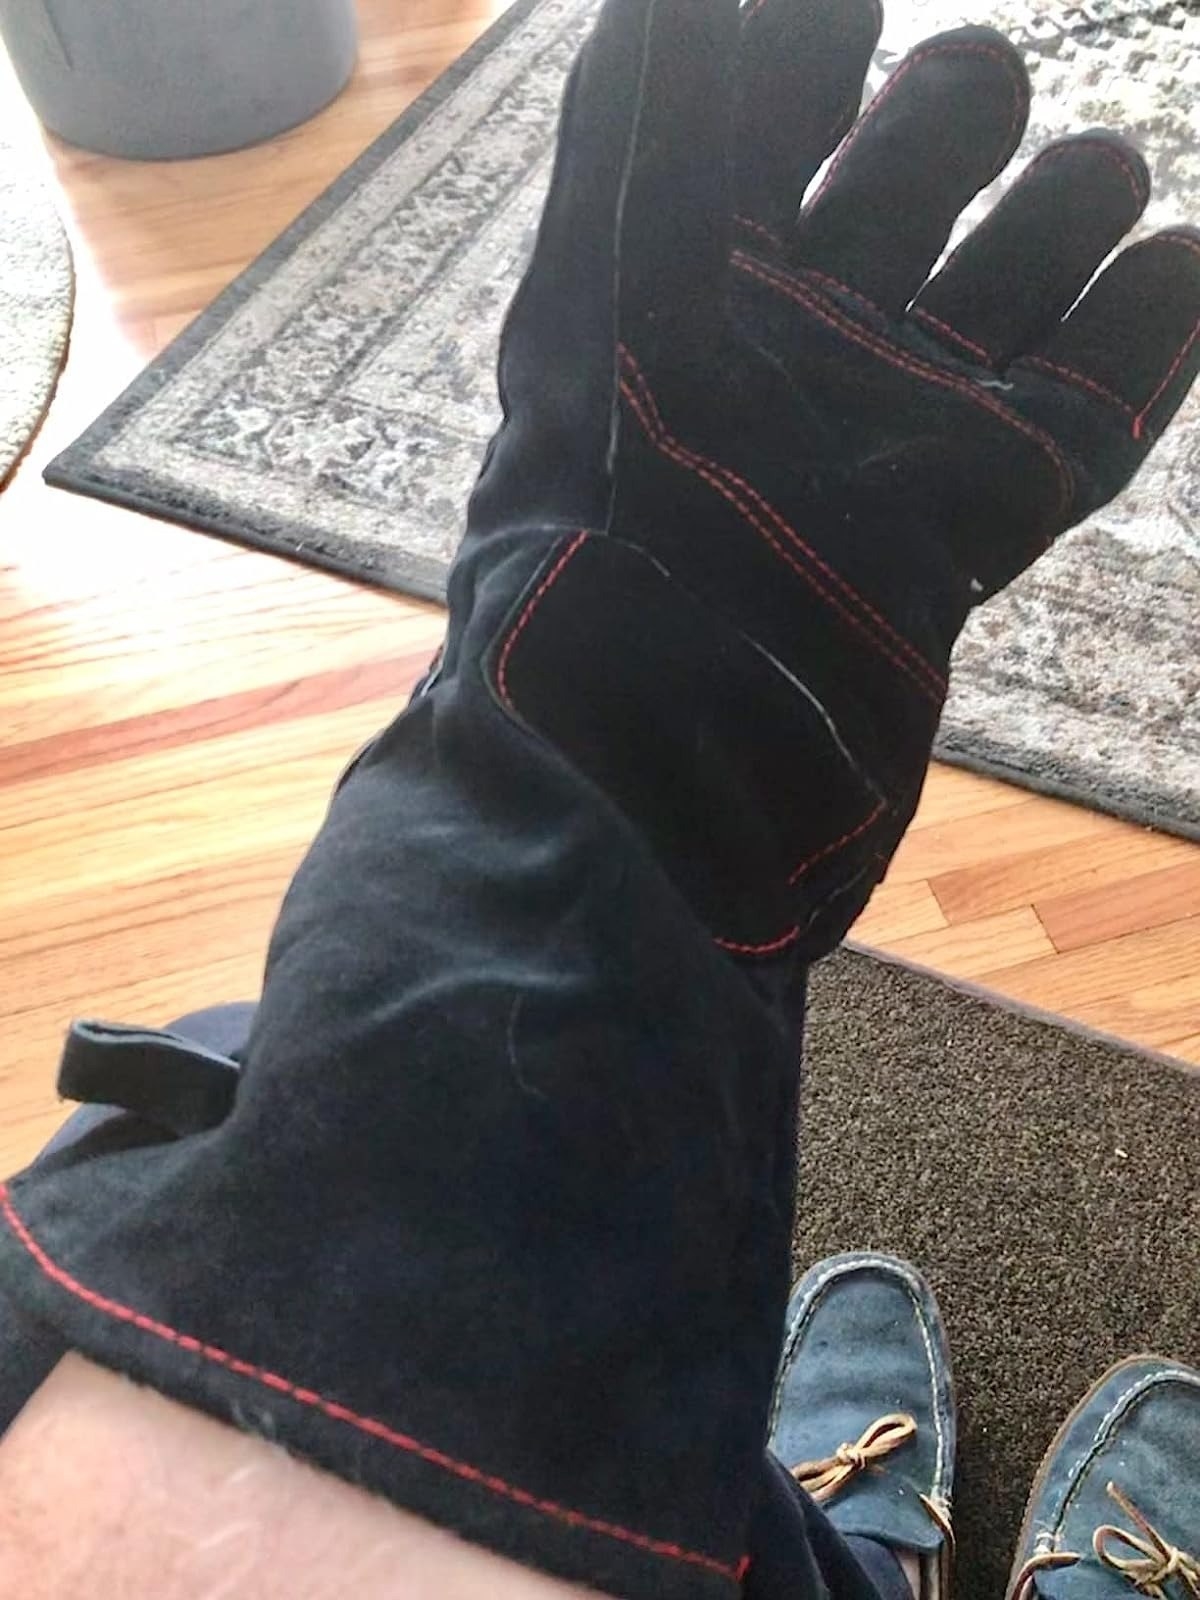 reviewer wearing black bite proof glove